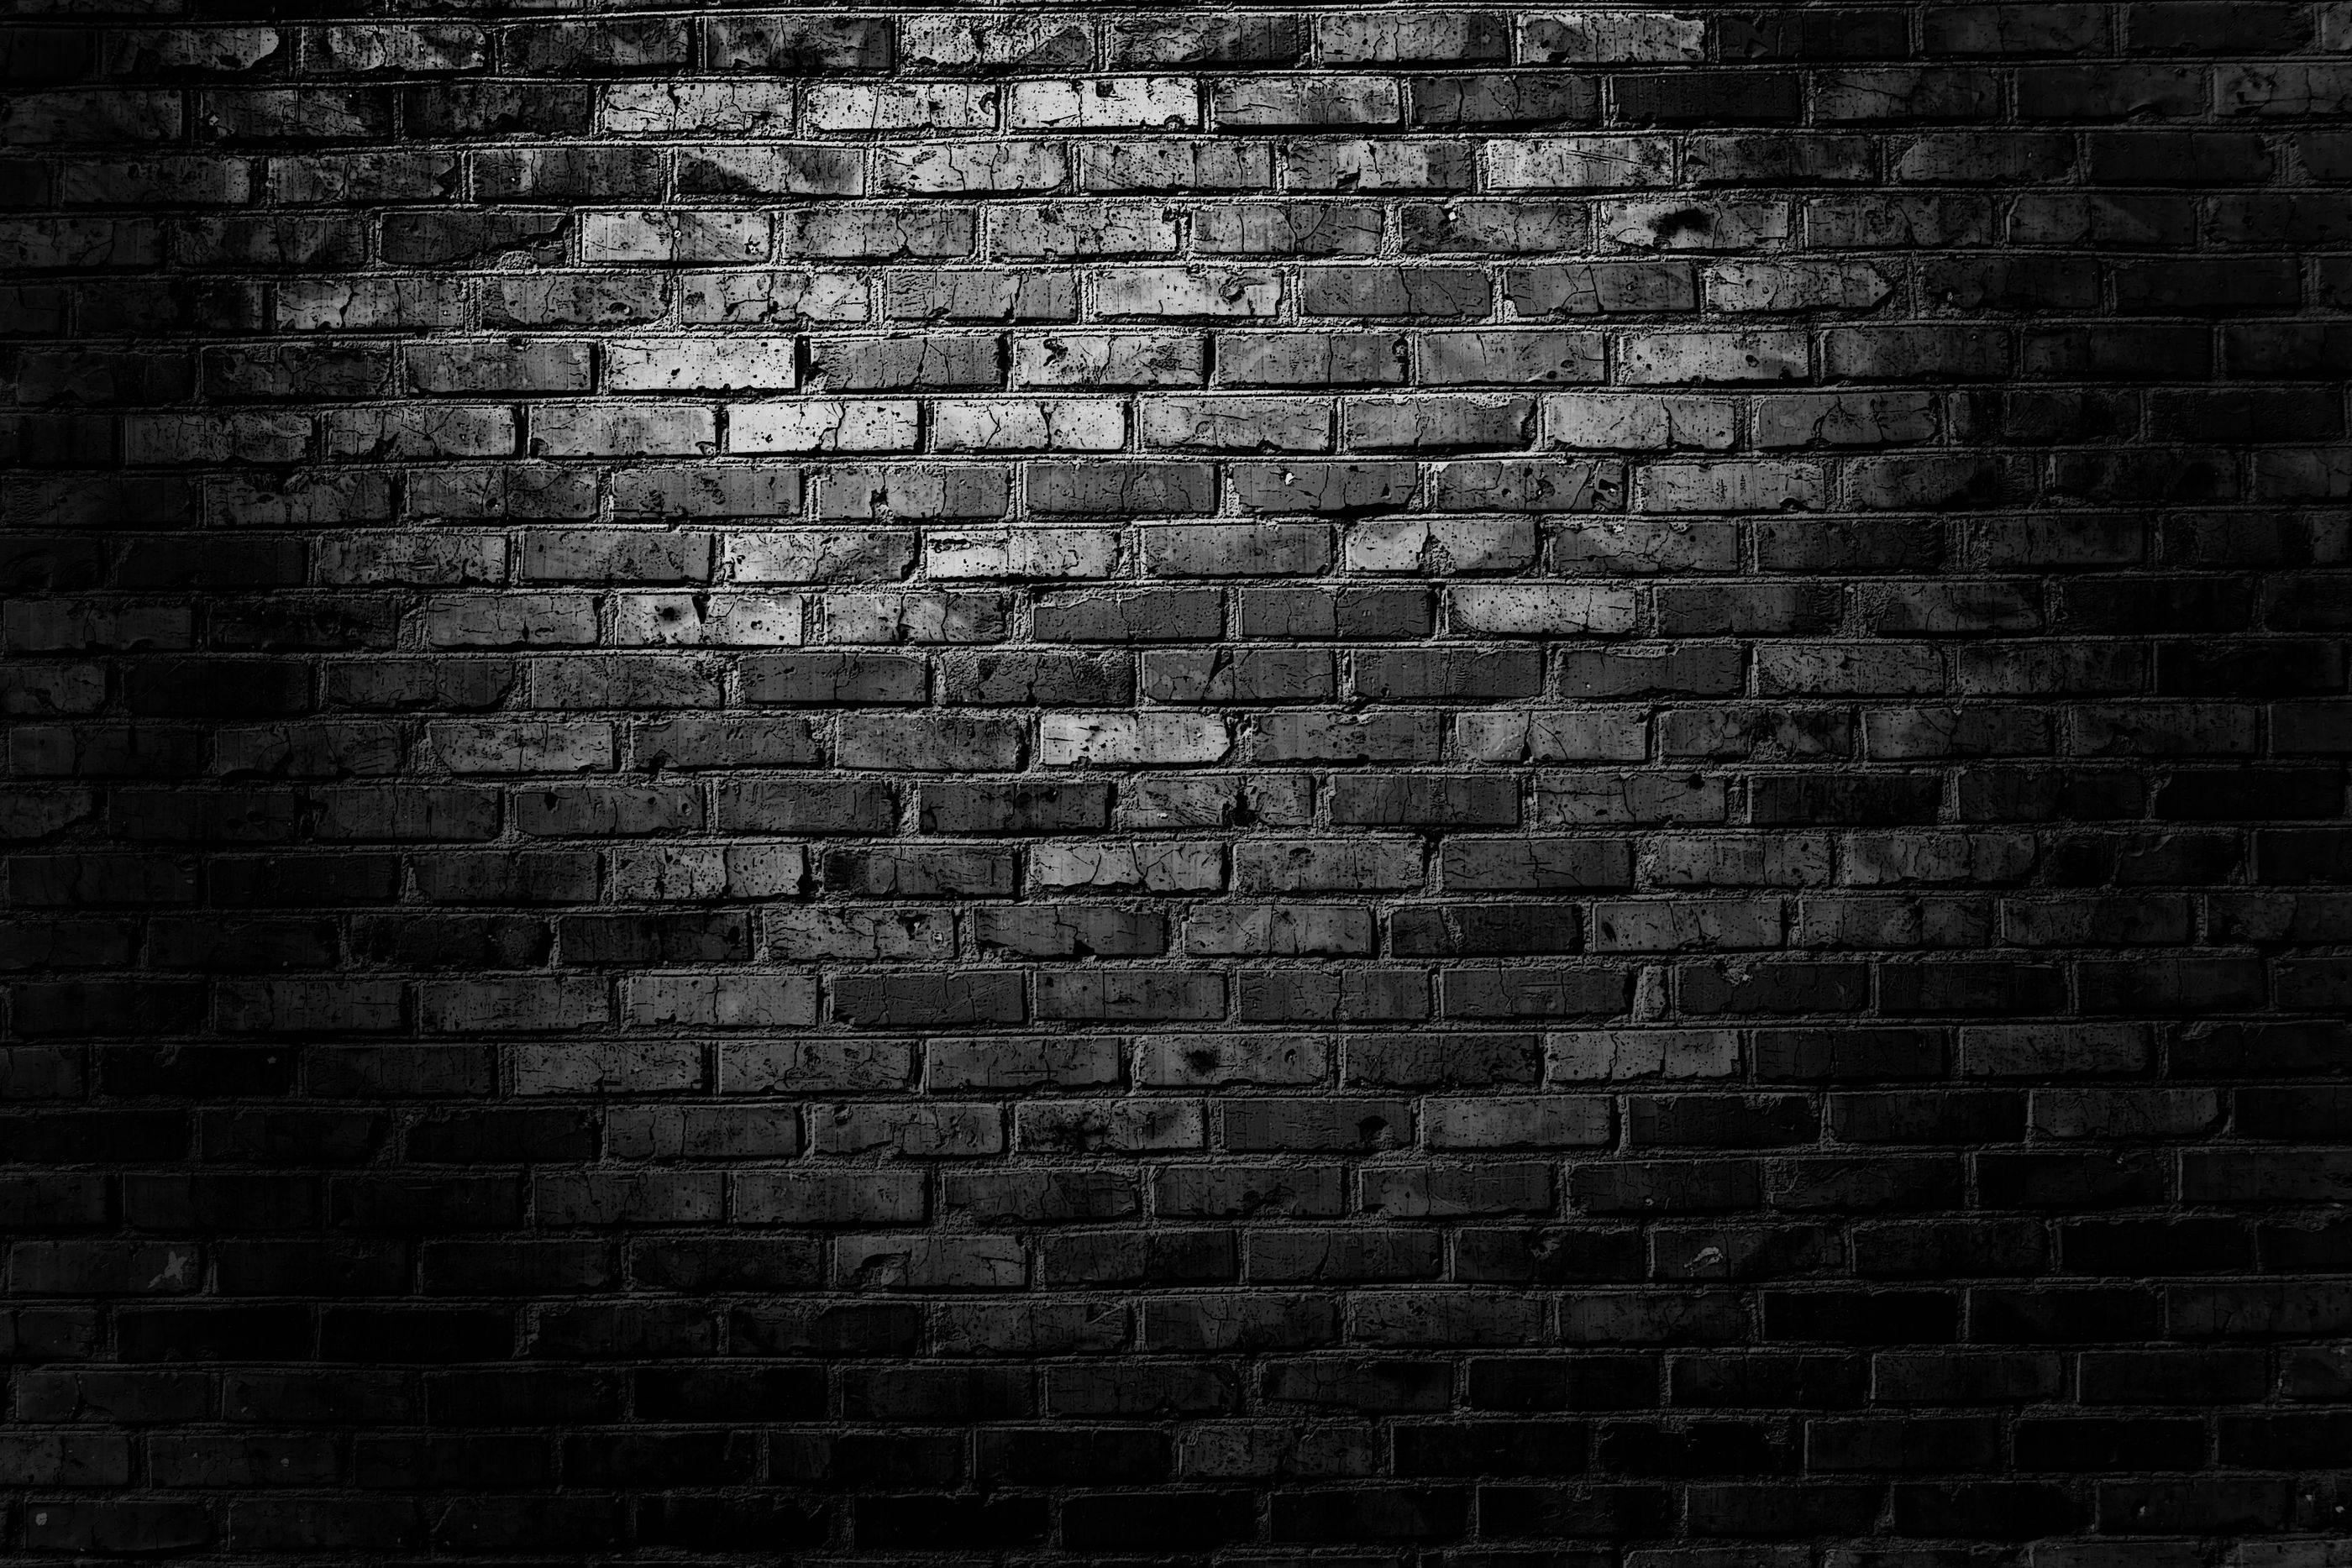 bricks wallpaper hd,brickwork,wall,black,brick,black and white